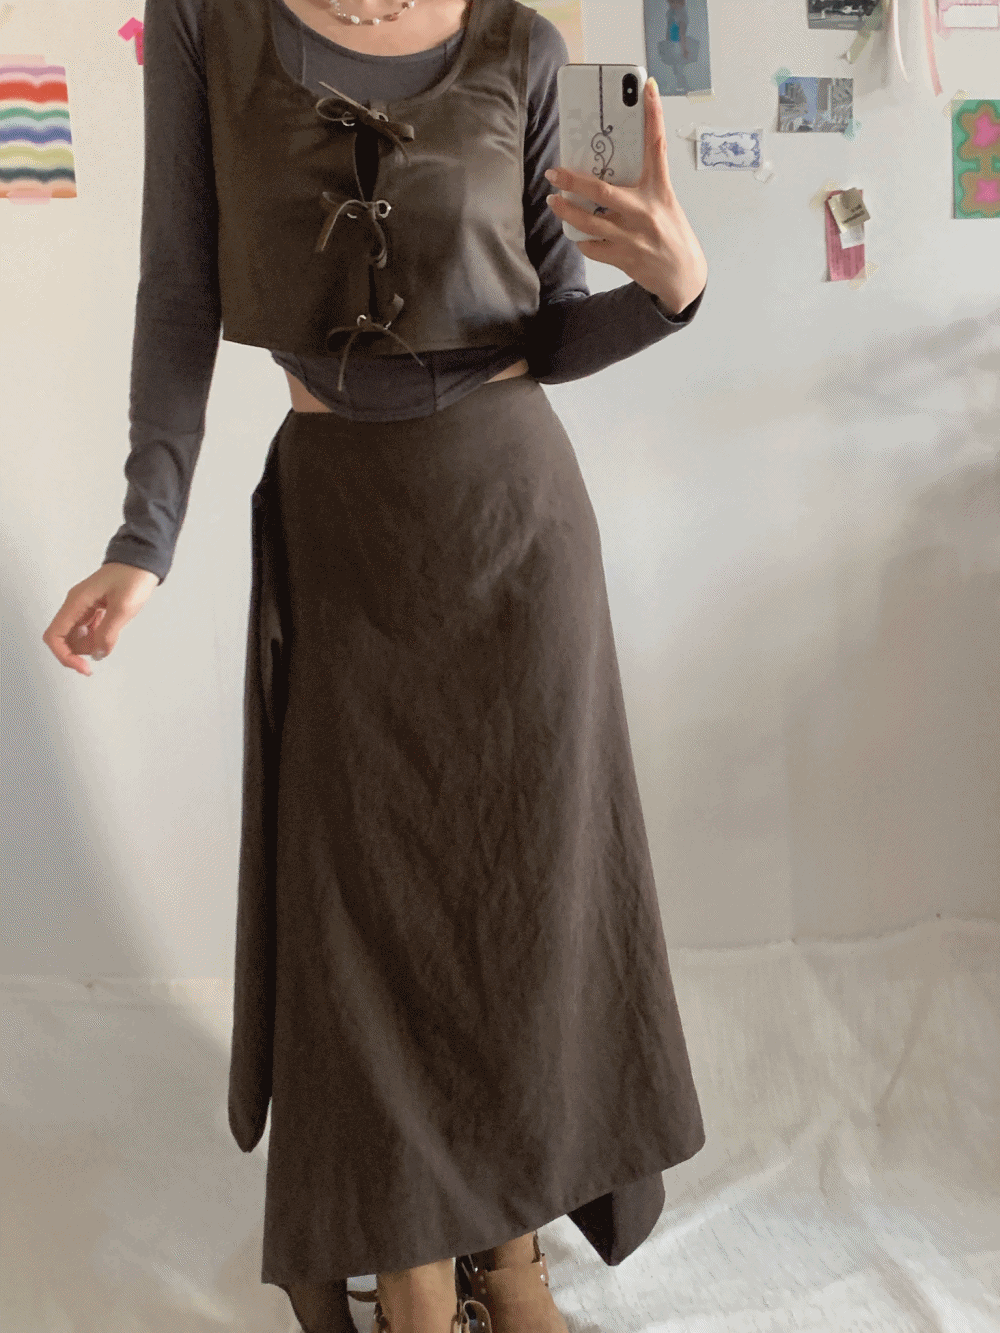 [Skirt] Suede Retro Frill Skirt / 2 colors